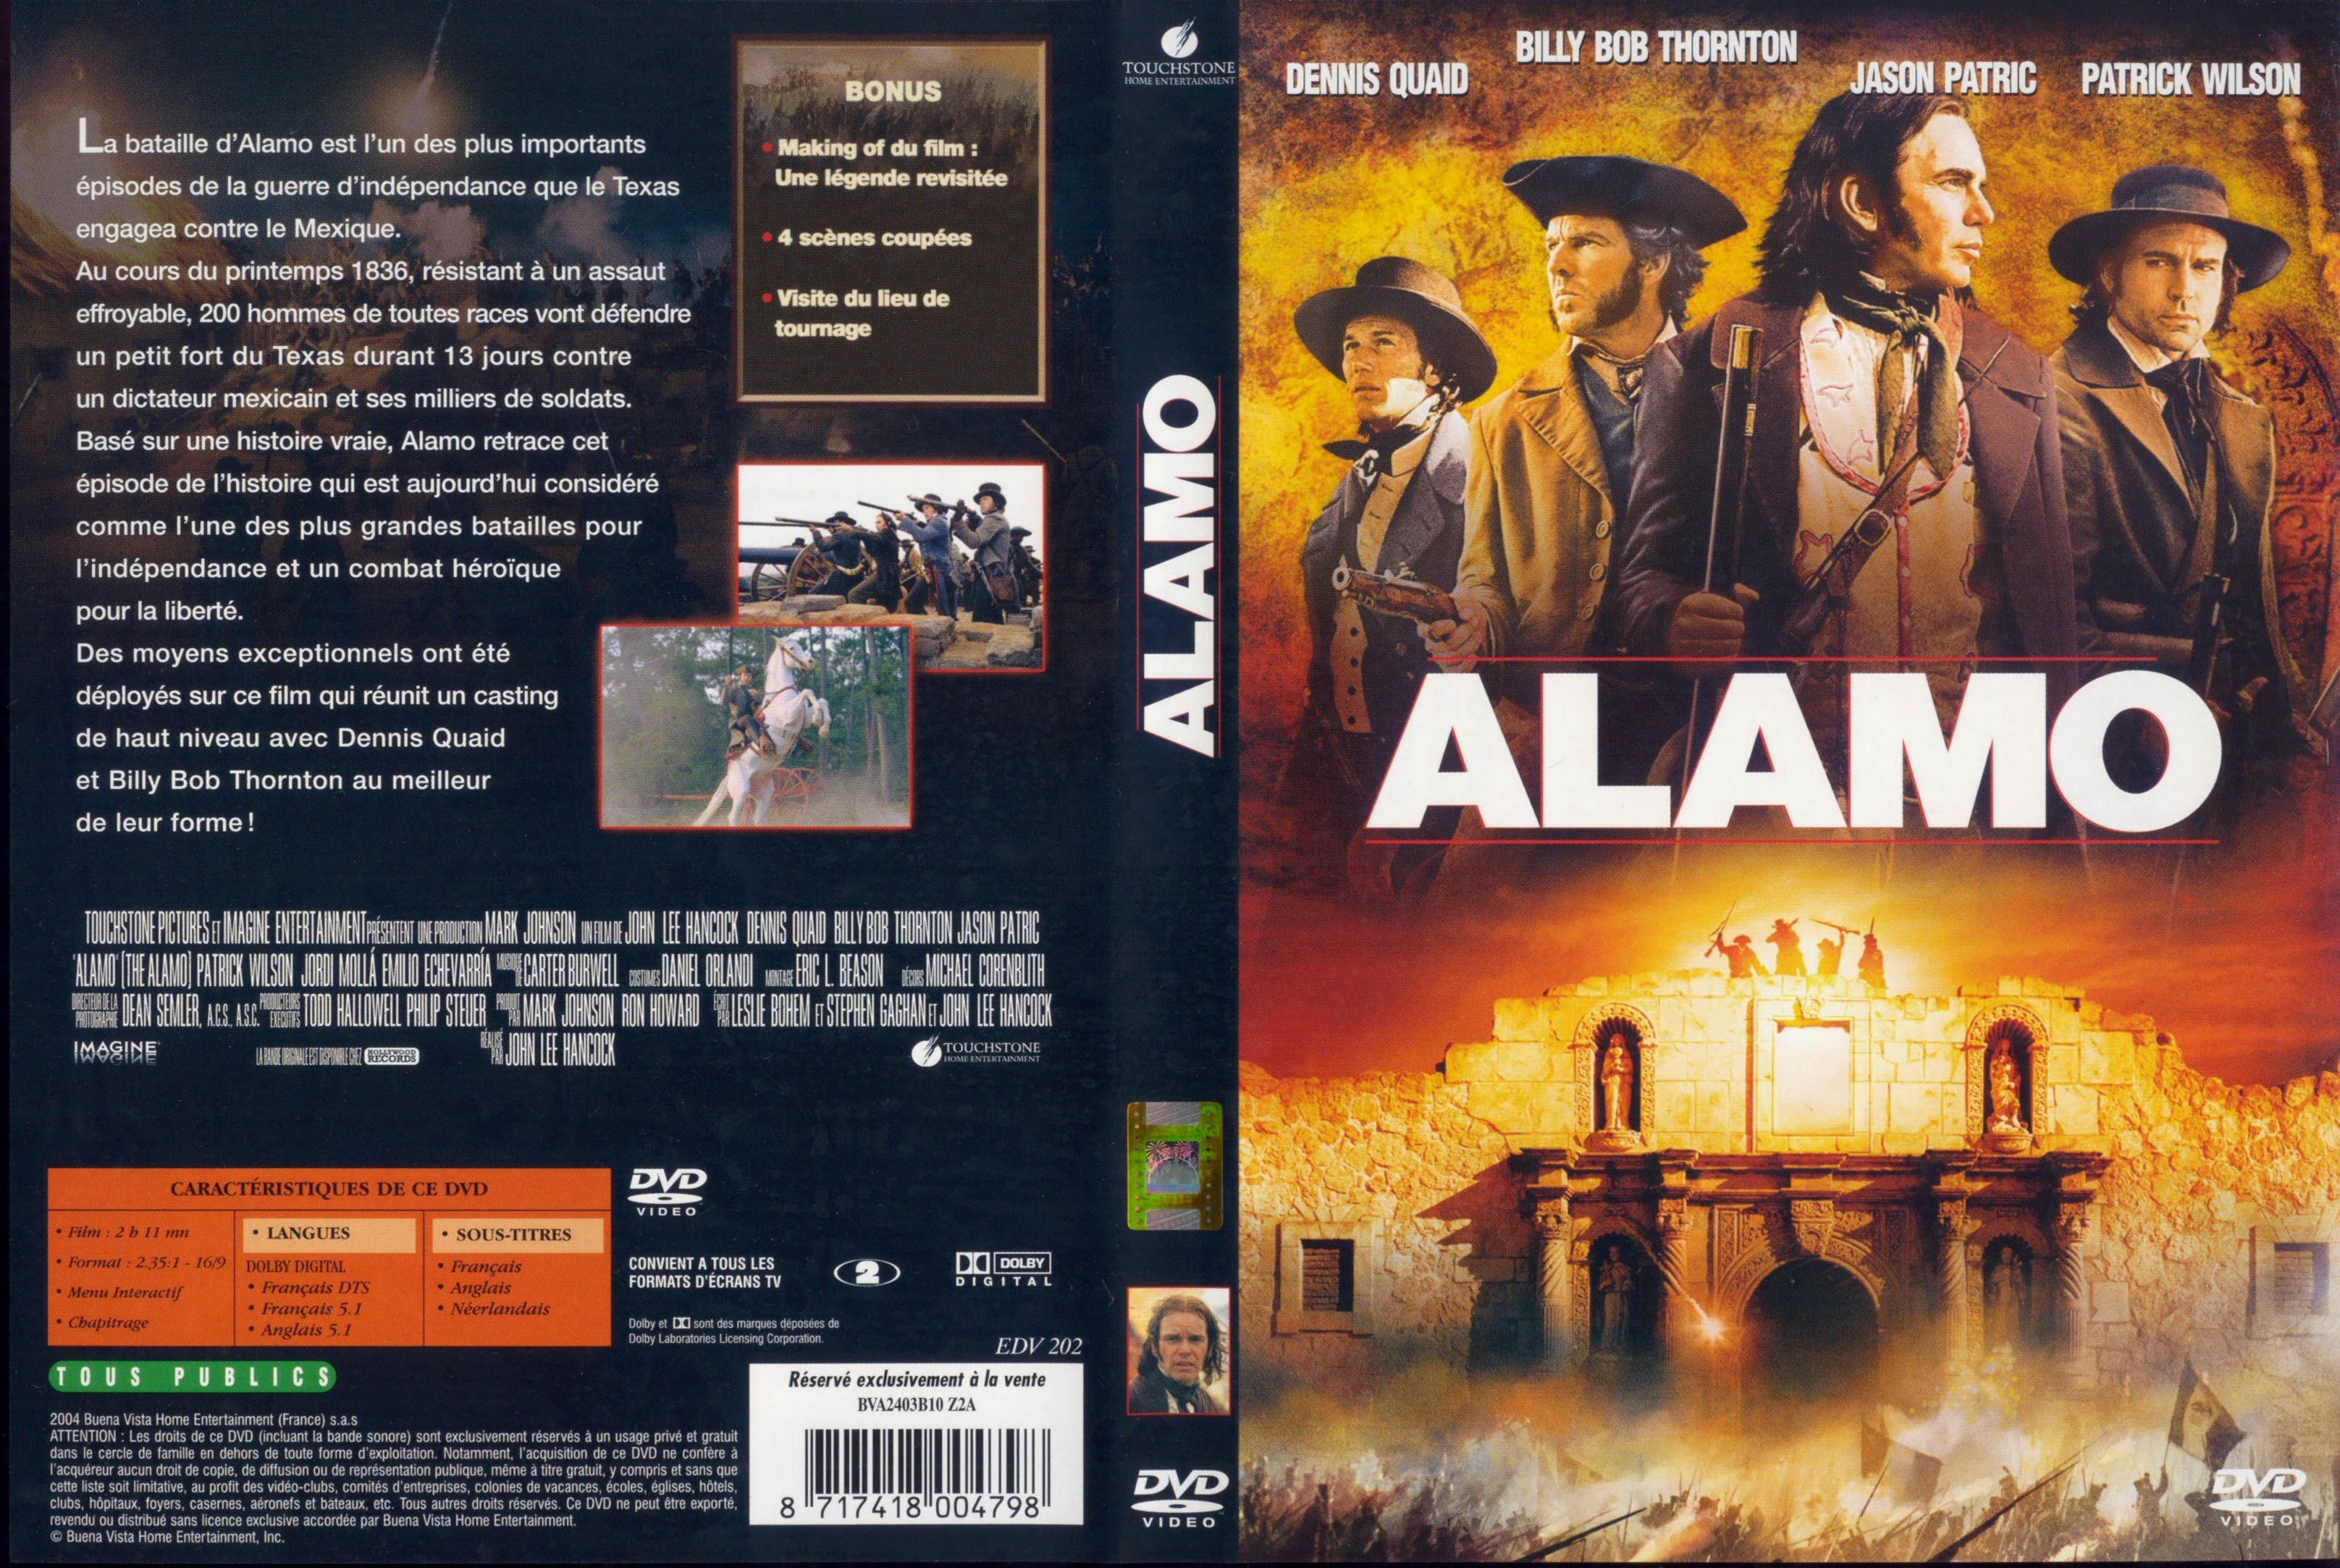 Jaquette DVD Alamo 2004